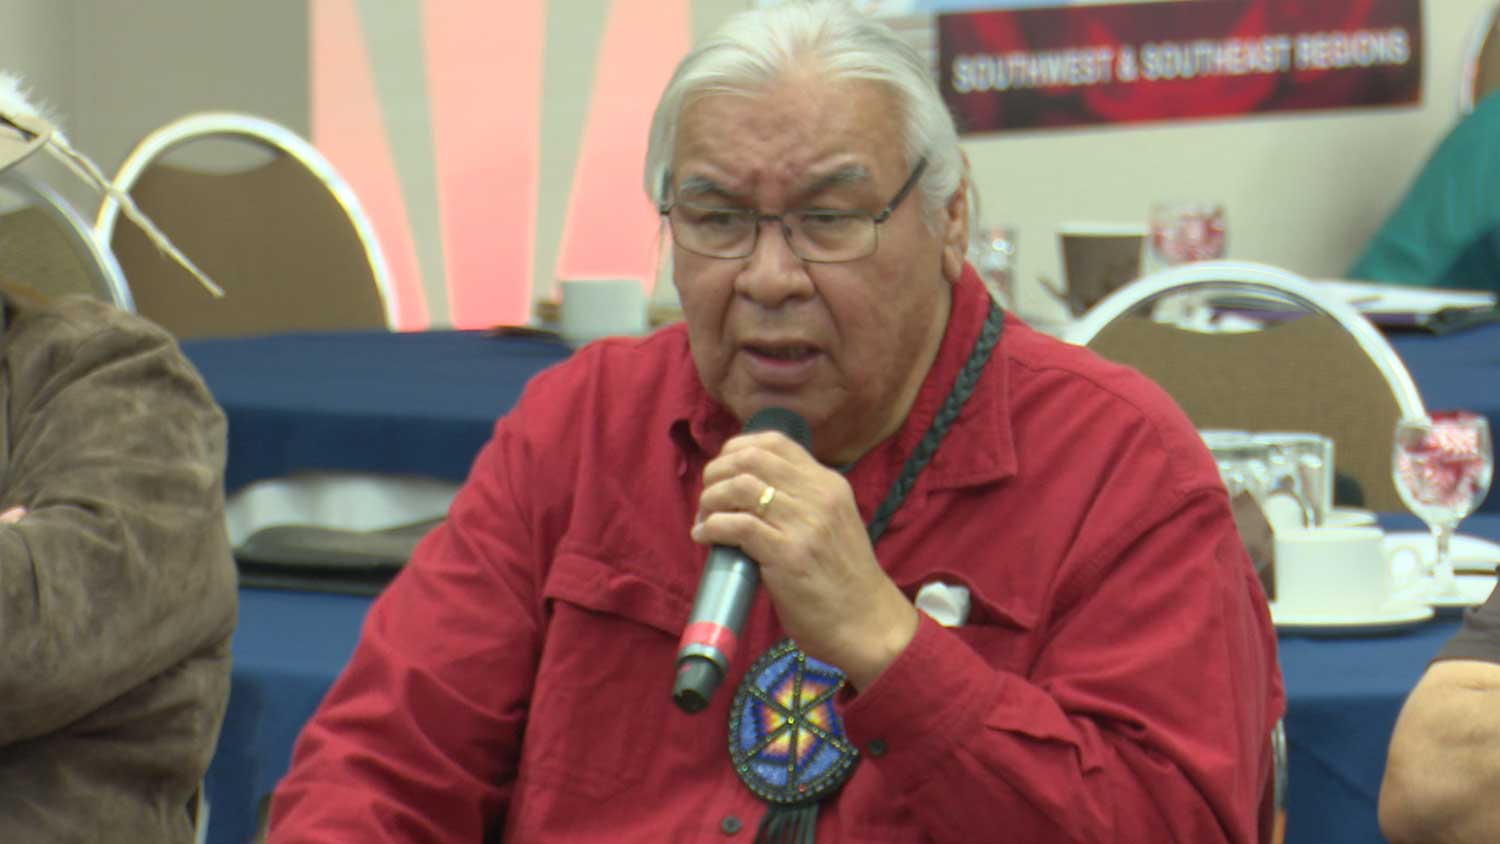 Union of Ontario Indians - Lands & Resources Forum 2019